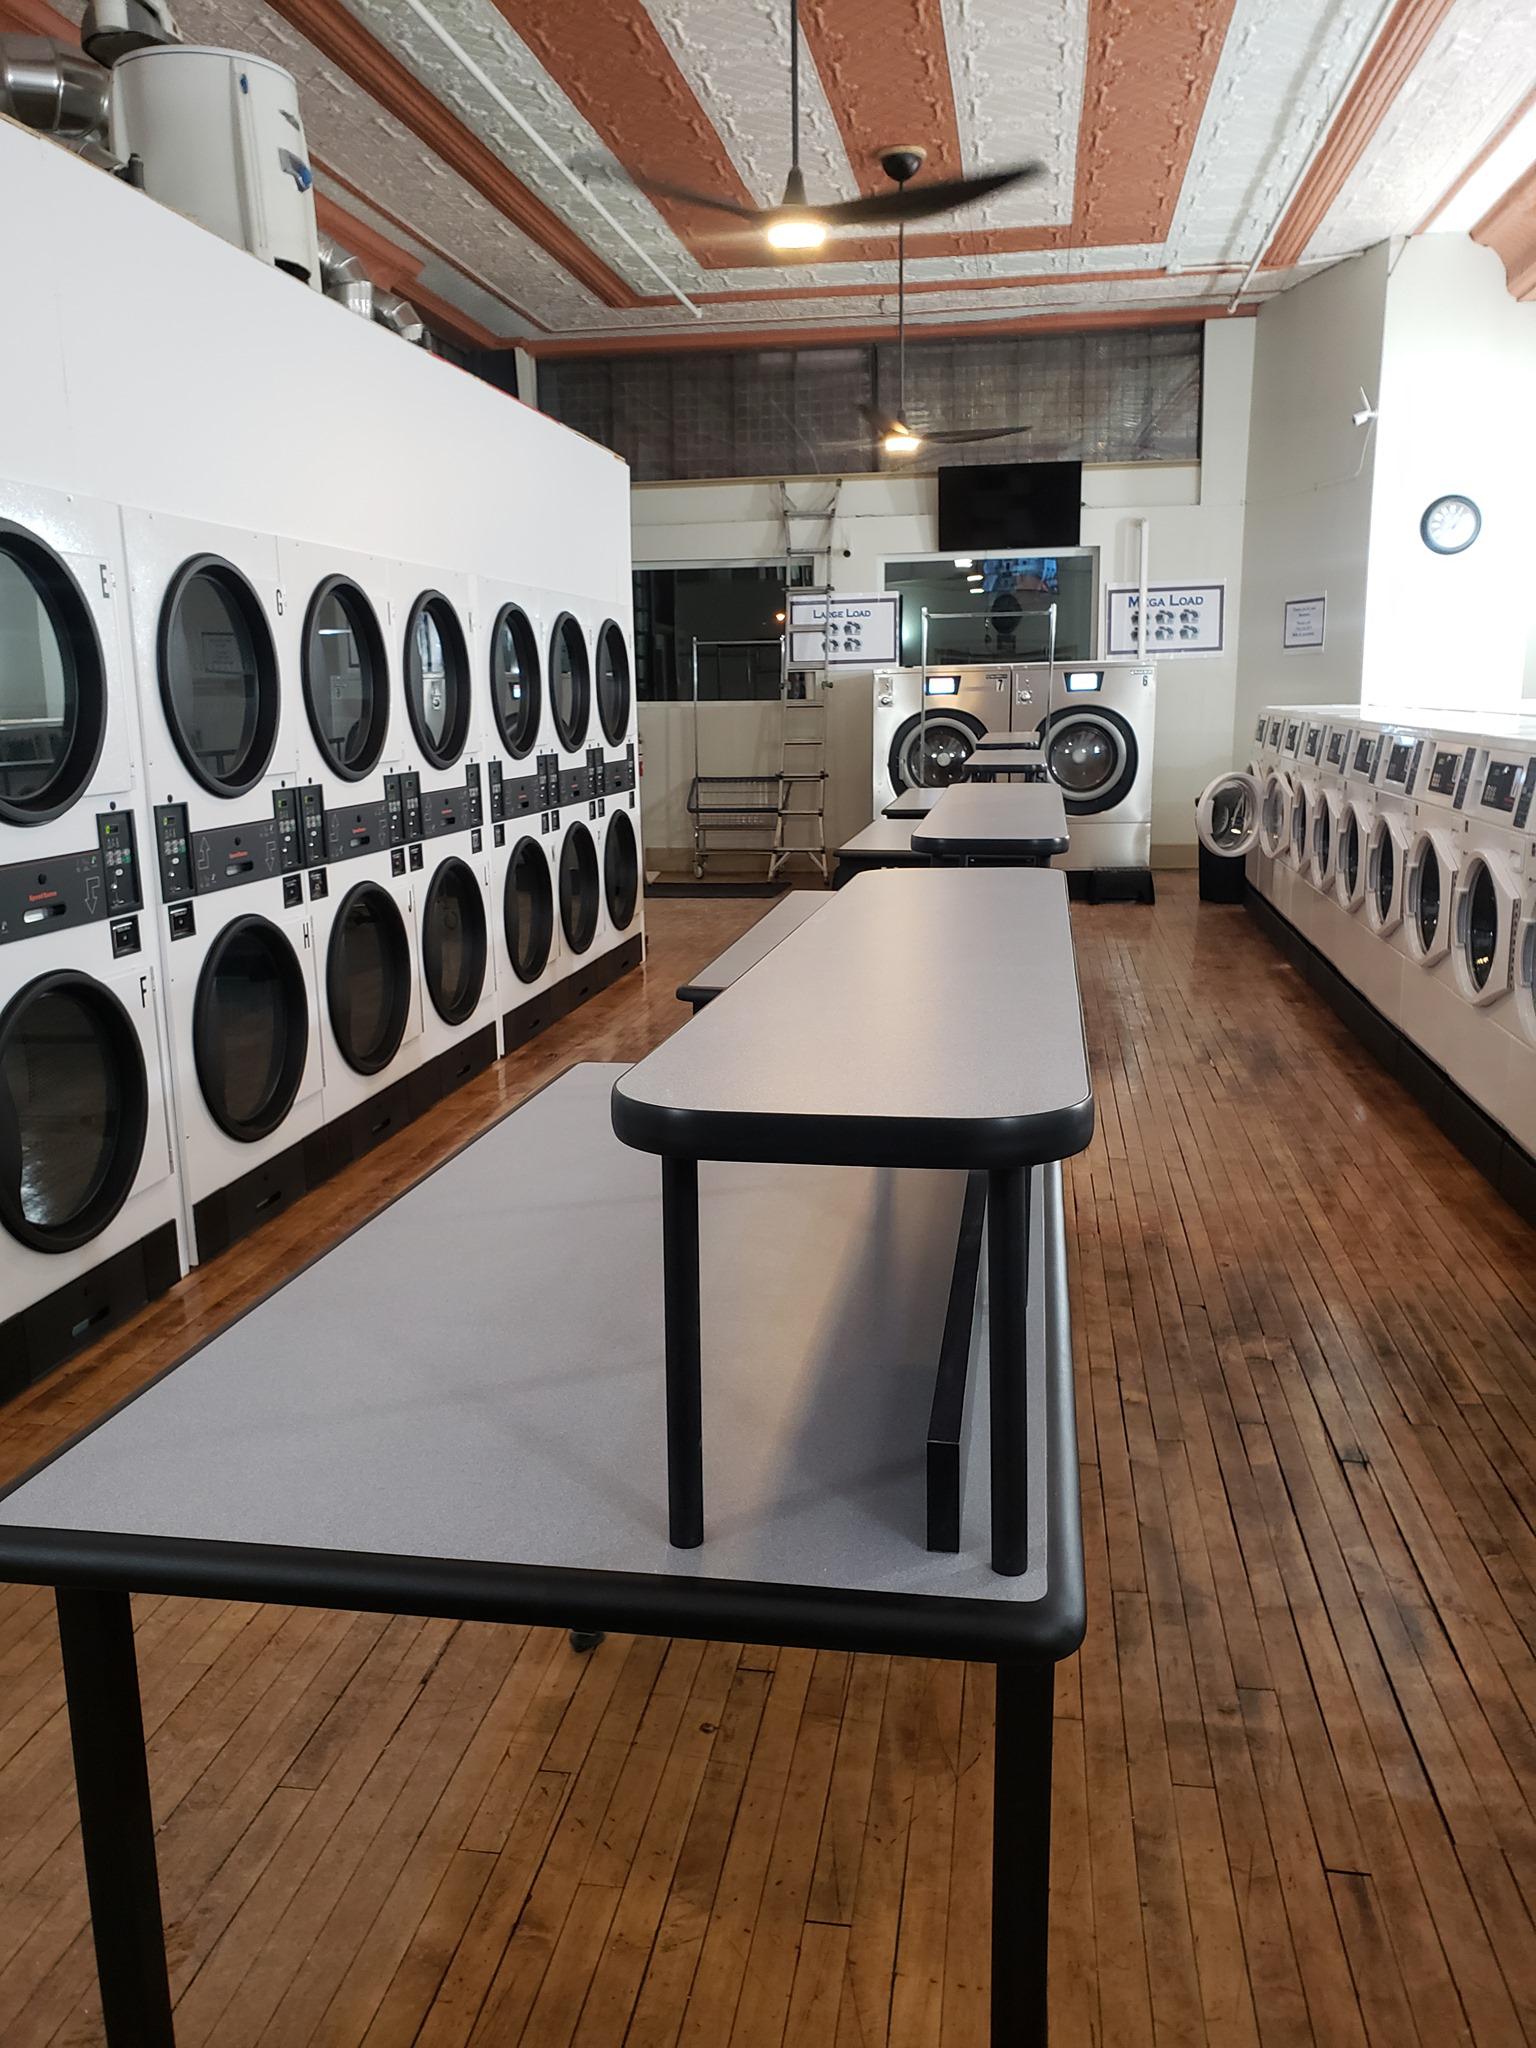 Laundry Machines – Westside Market in Merrill, WI